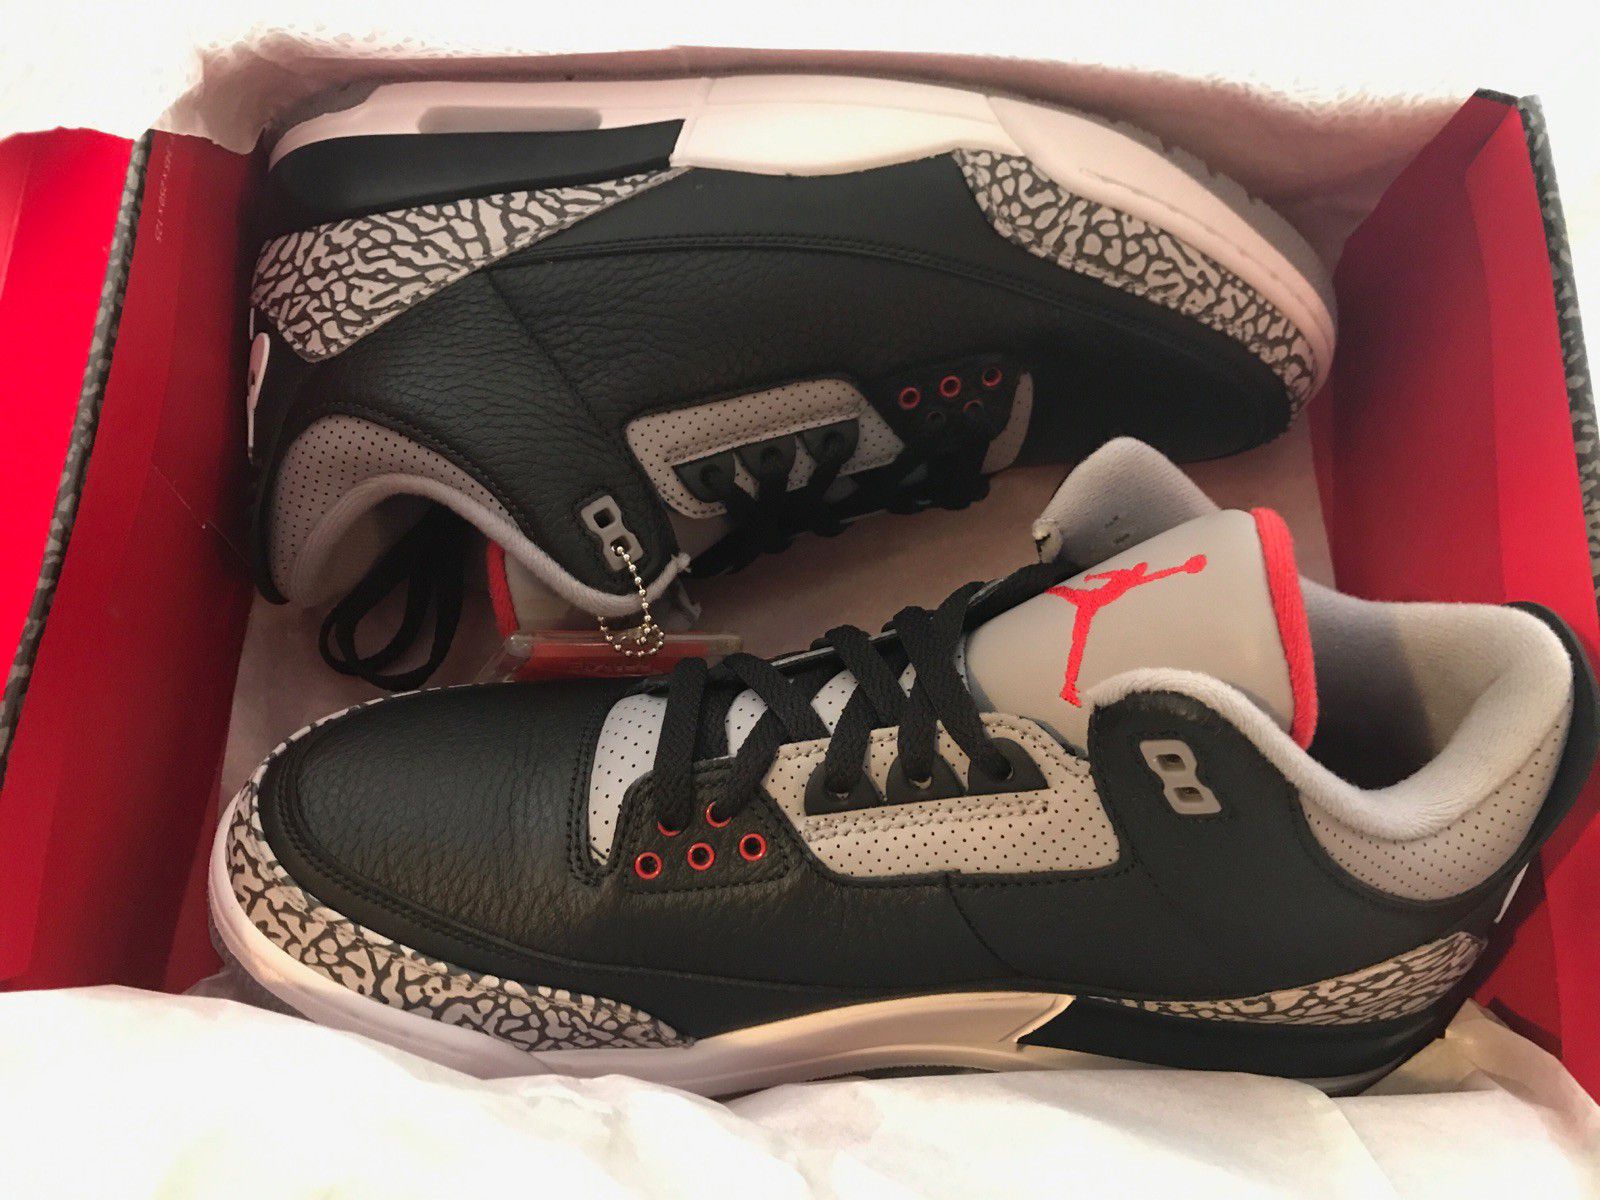 Nike Air Jordan 3 Retro Size 12 New in Box